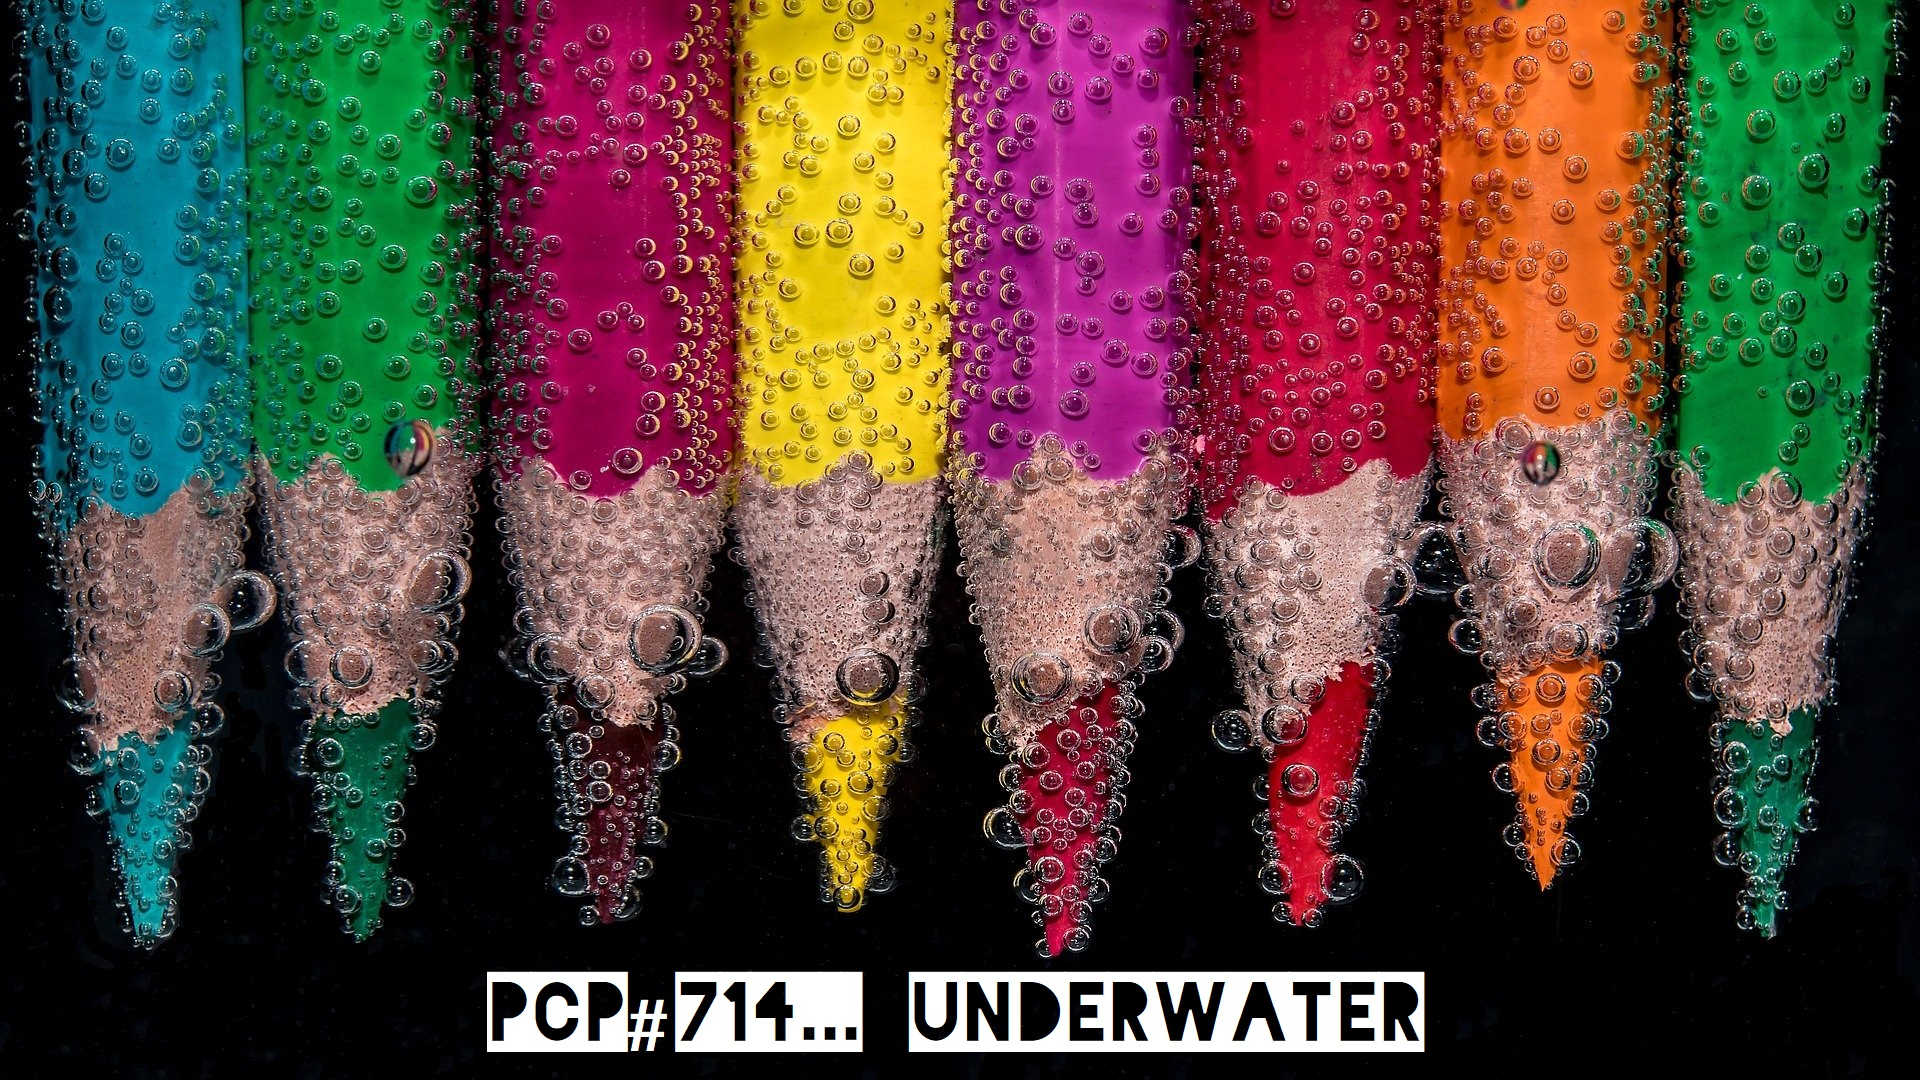 PCP#714... Underwater.....